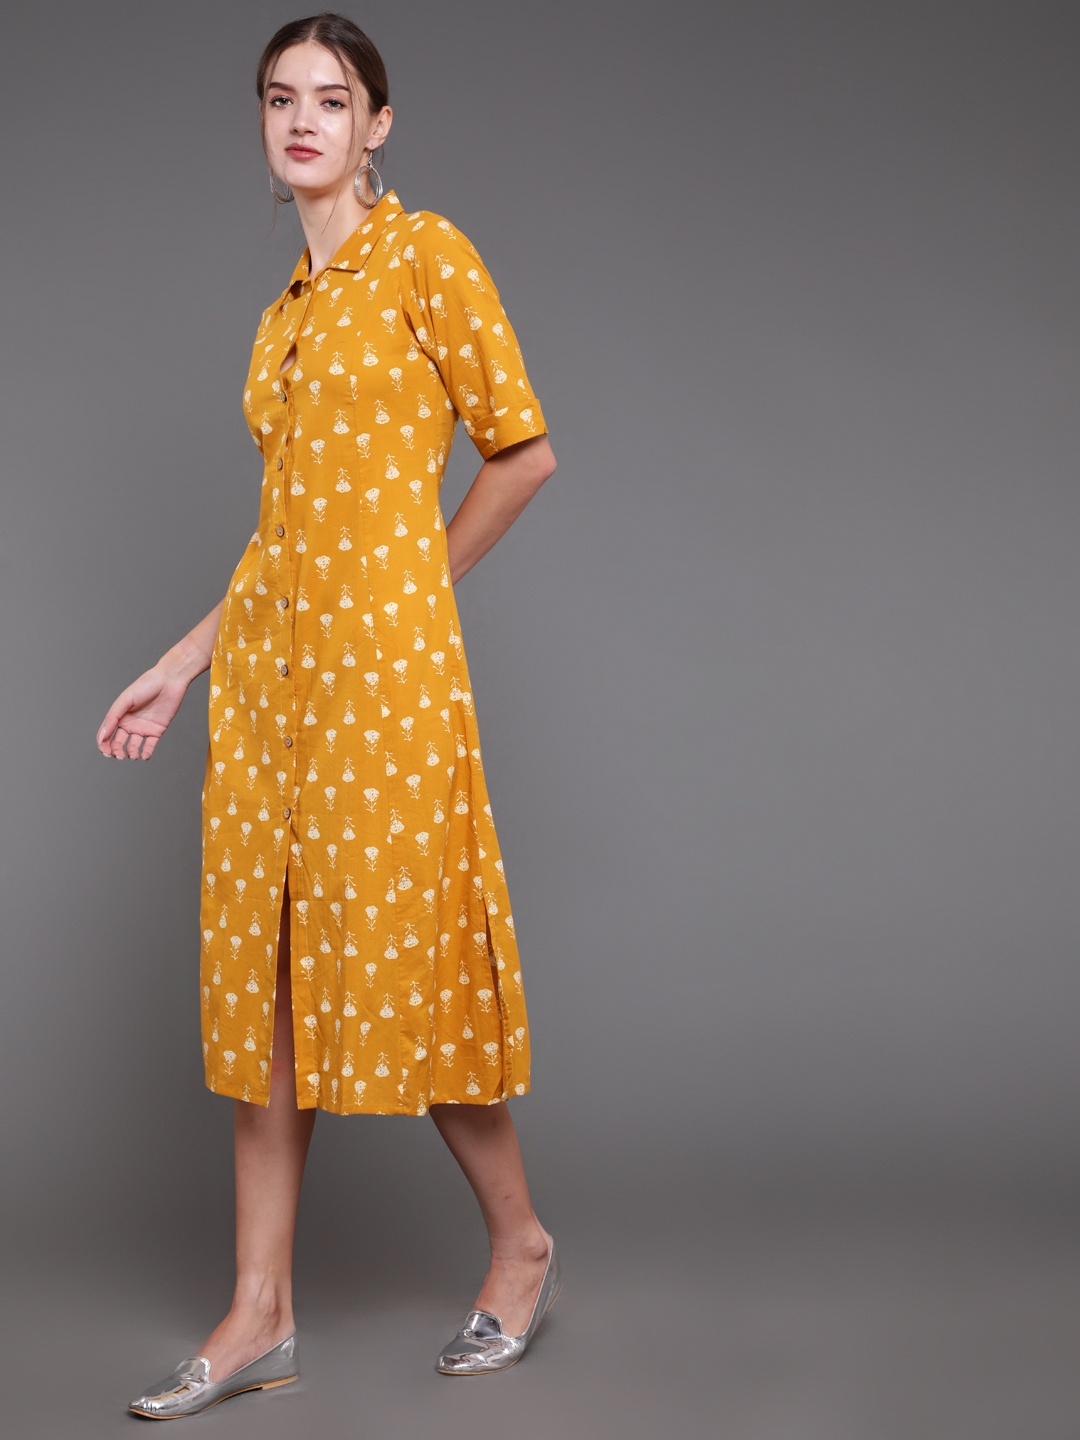 Printed Cotton Yellow Dress